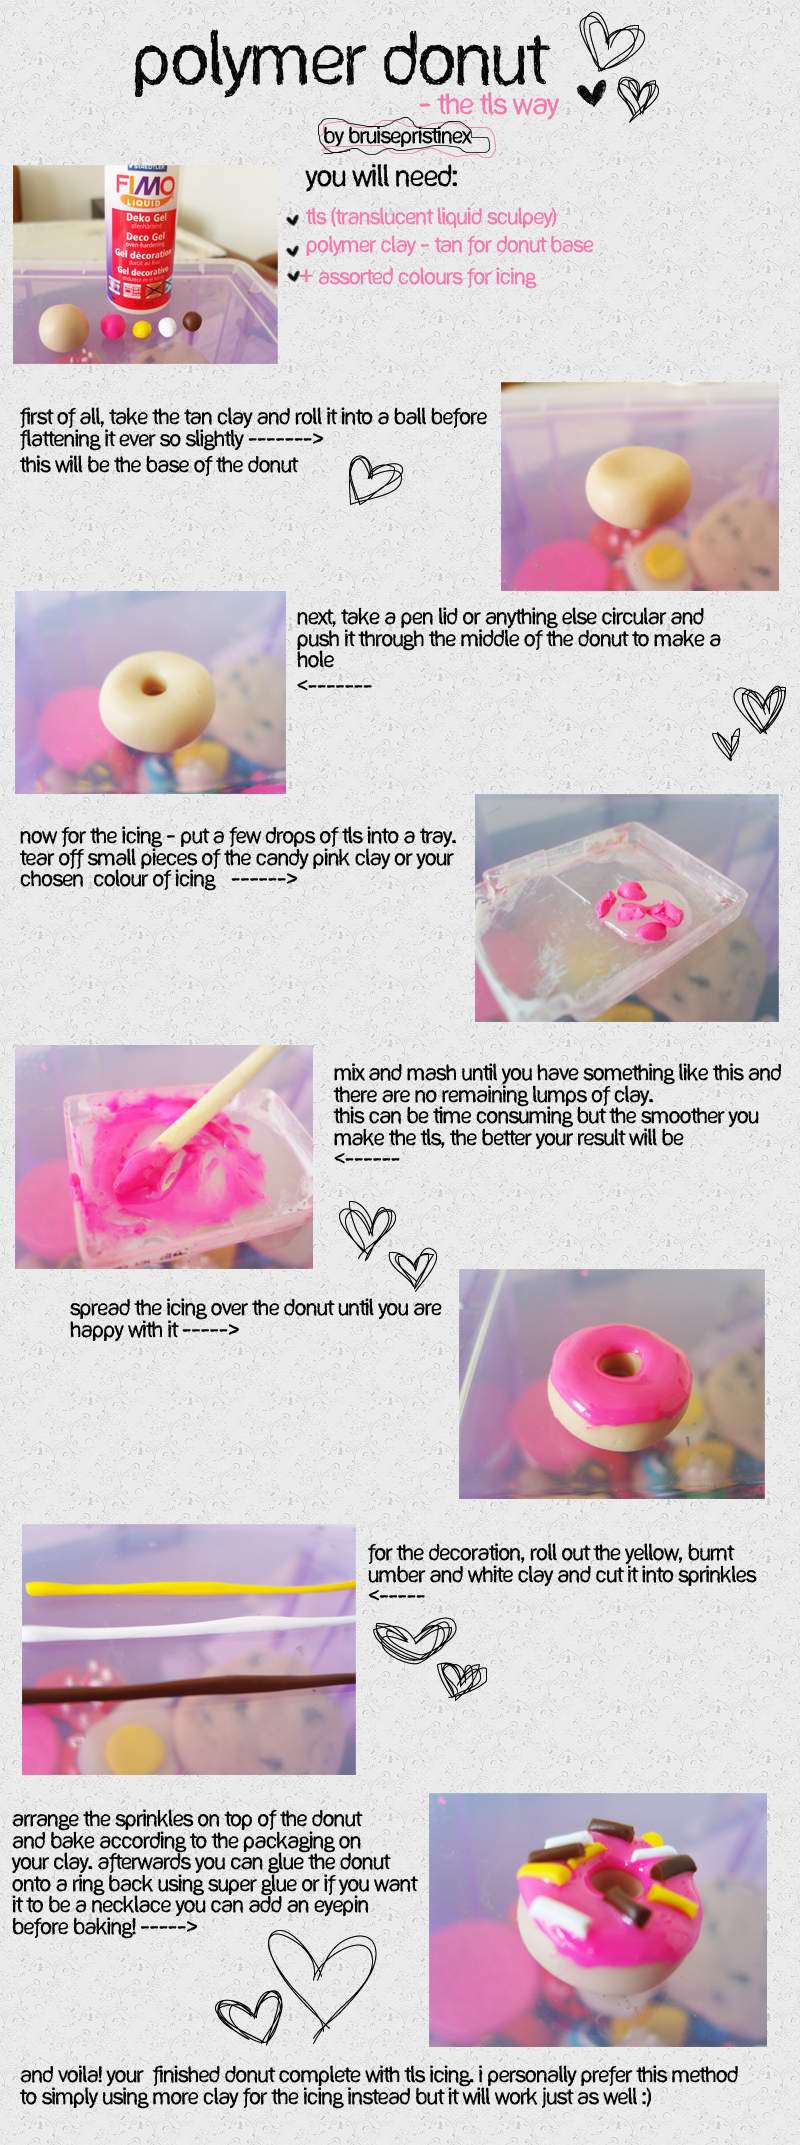 polymer_donut_tls_tutorial_by_bruisepristinex-d3h132y.png